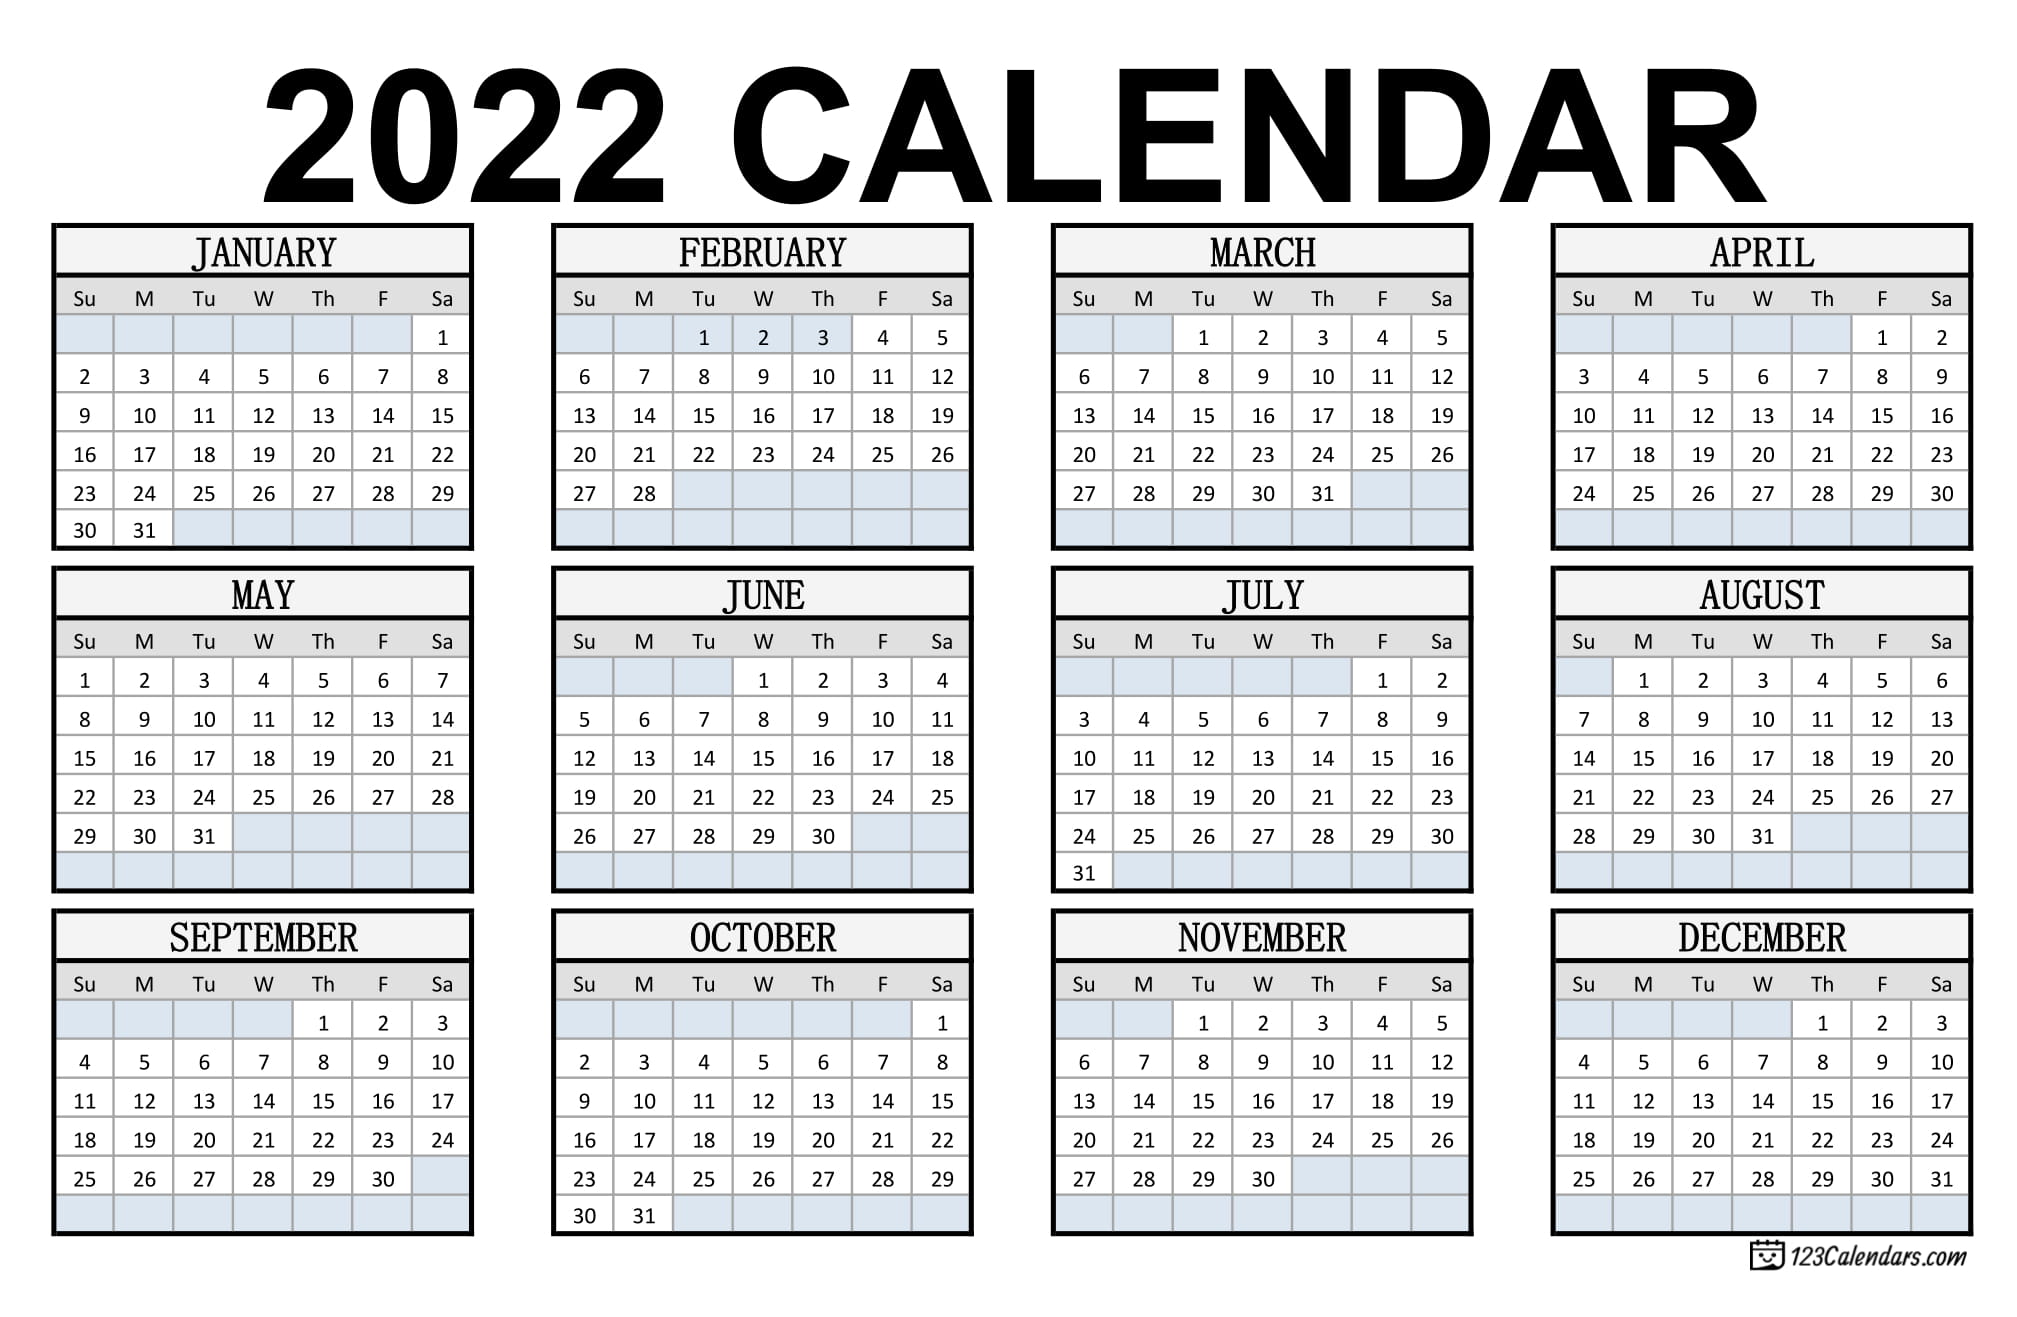 Year 2022 Calendar Templates | 123Calendars.com